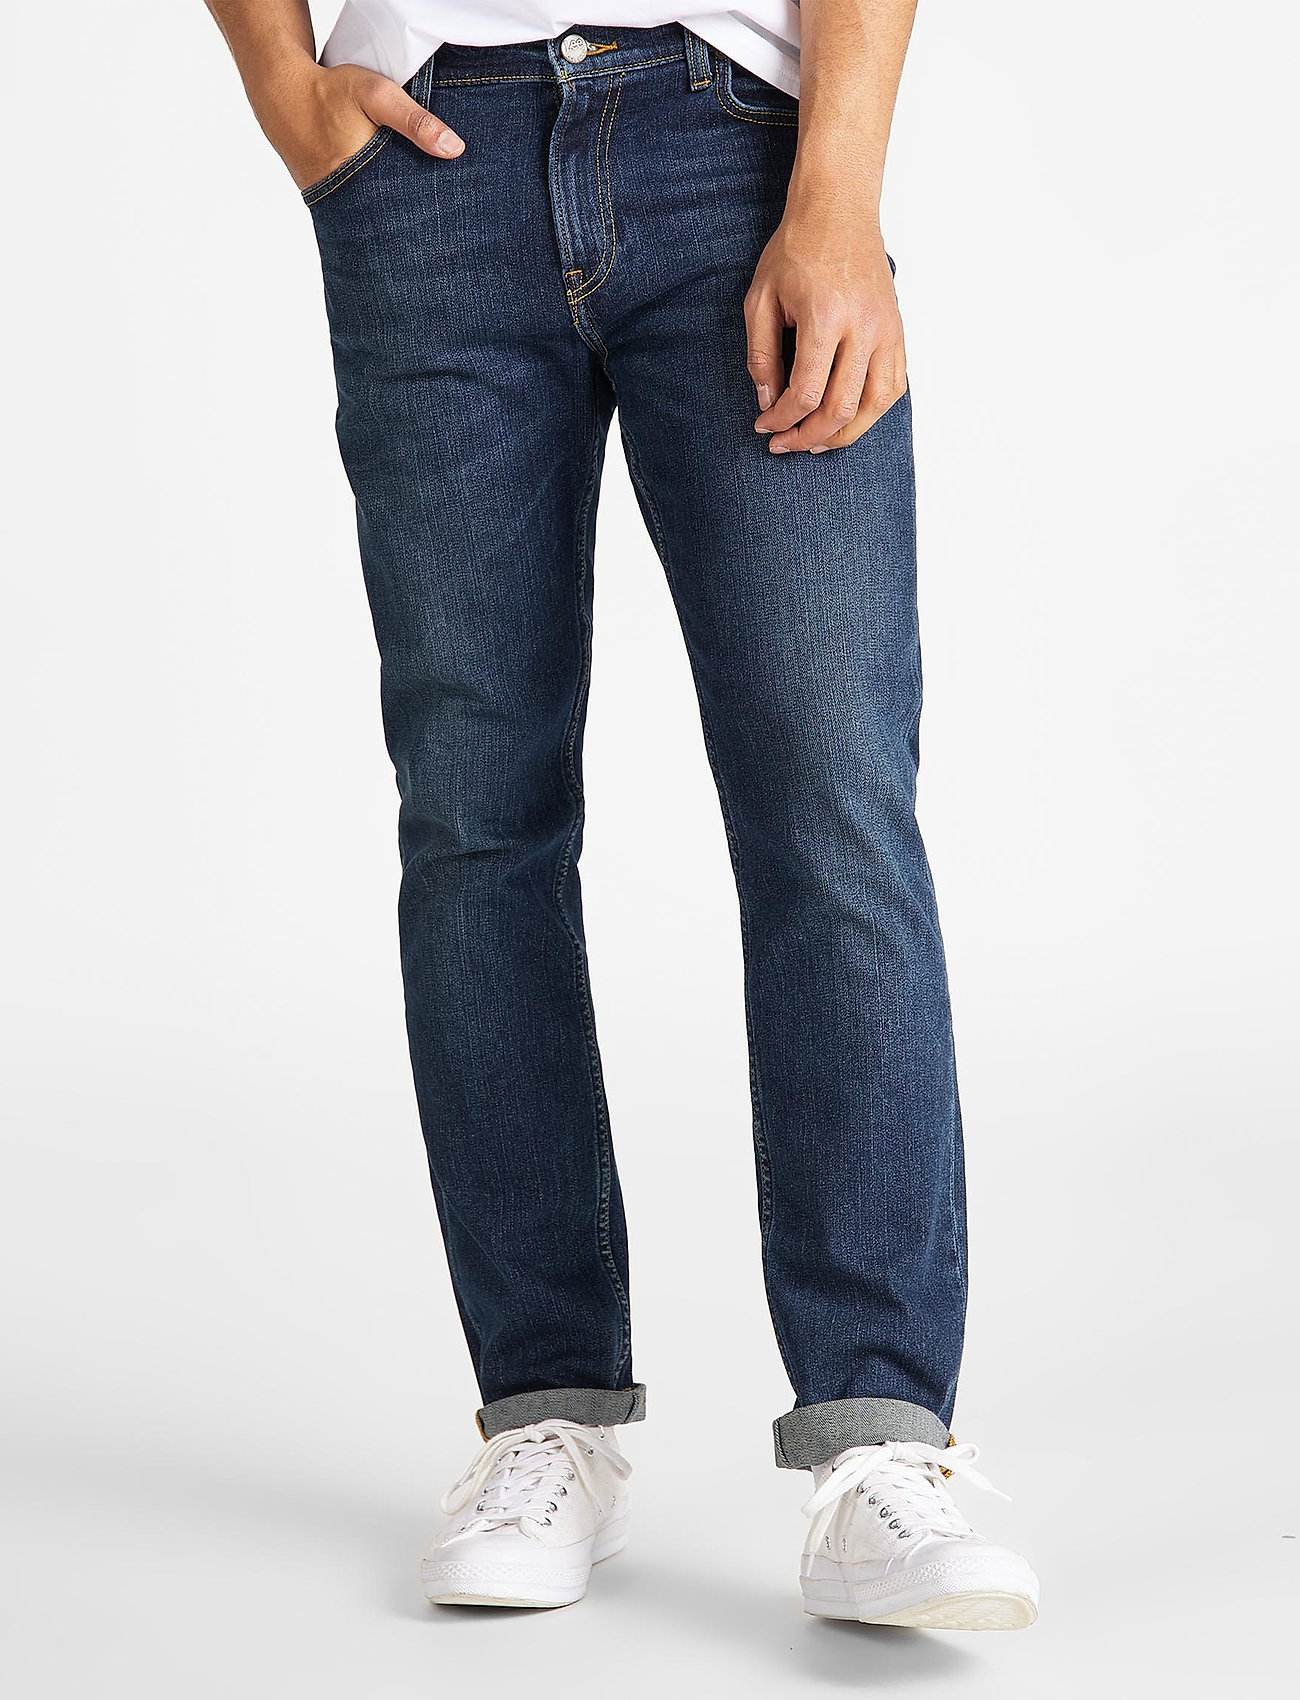 Lee Jeans - Slim jeans - Boozt.com